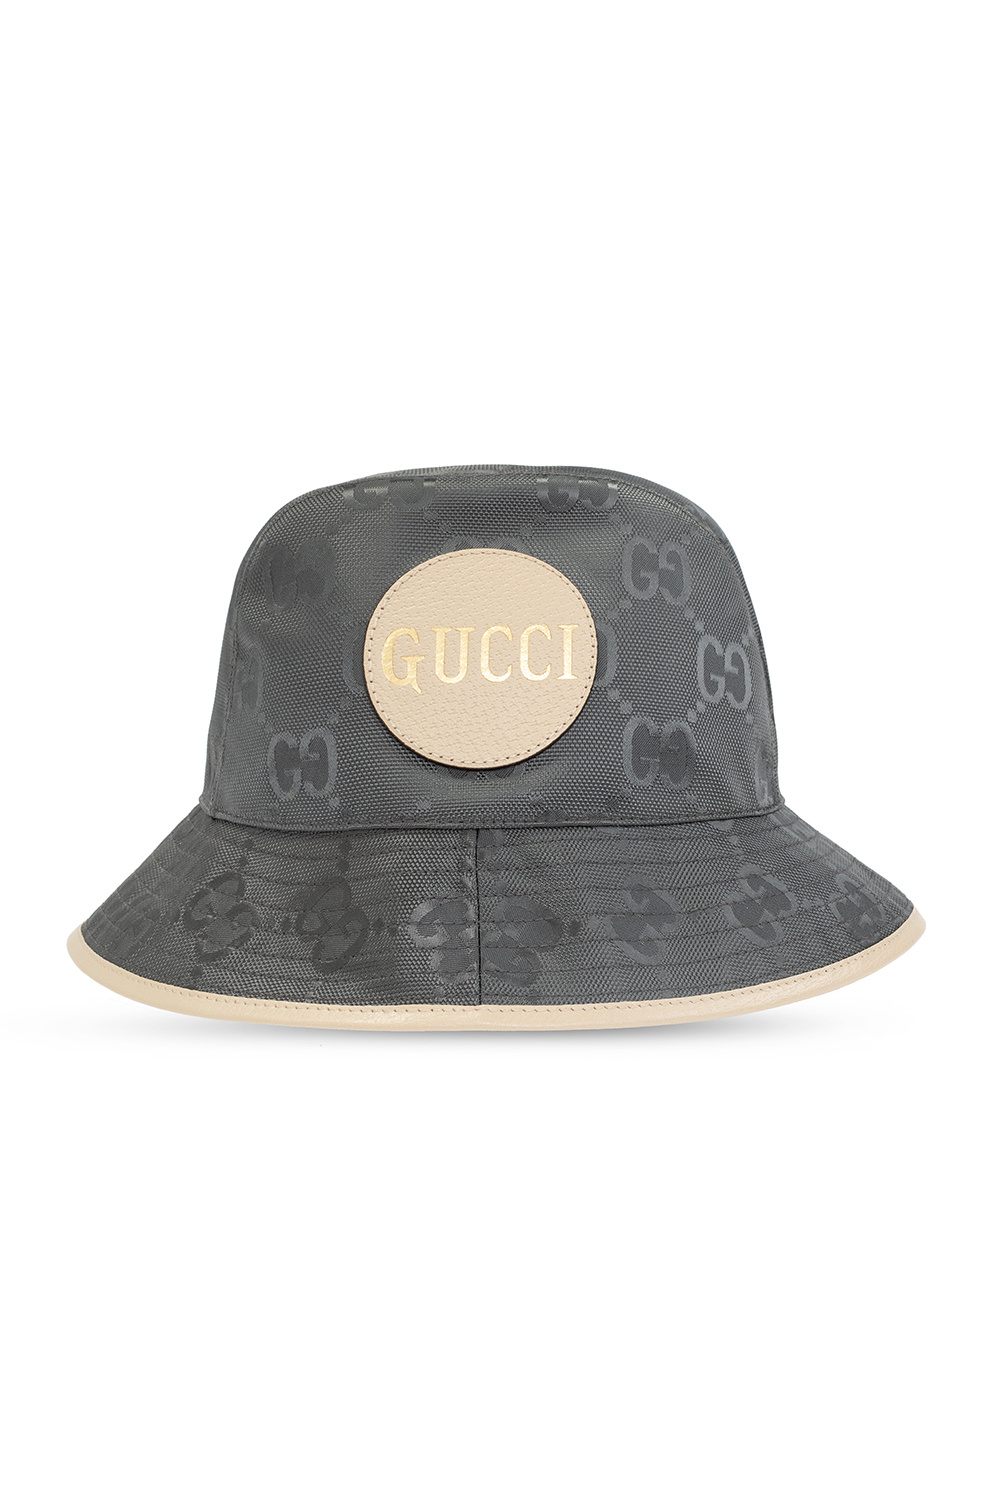 Gucci GG print hat